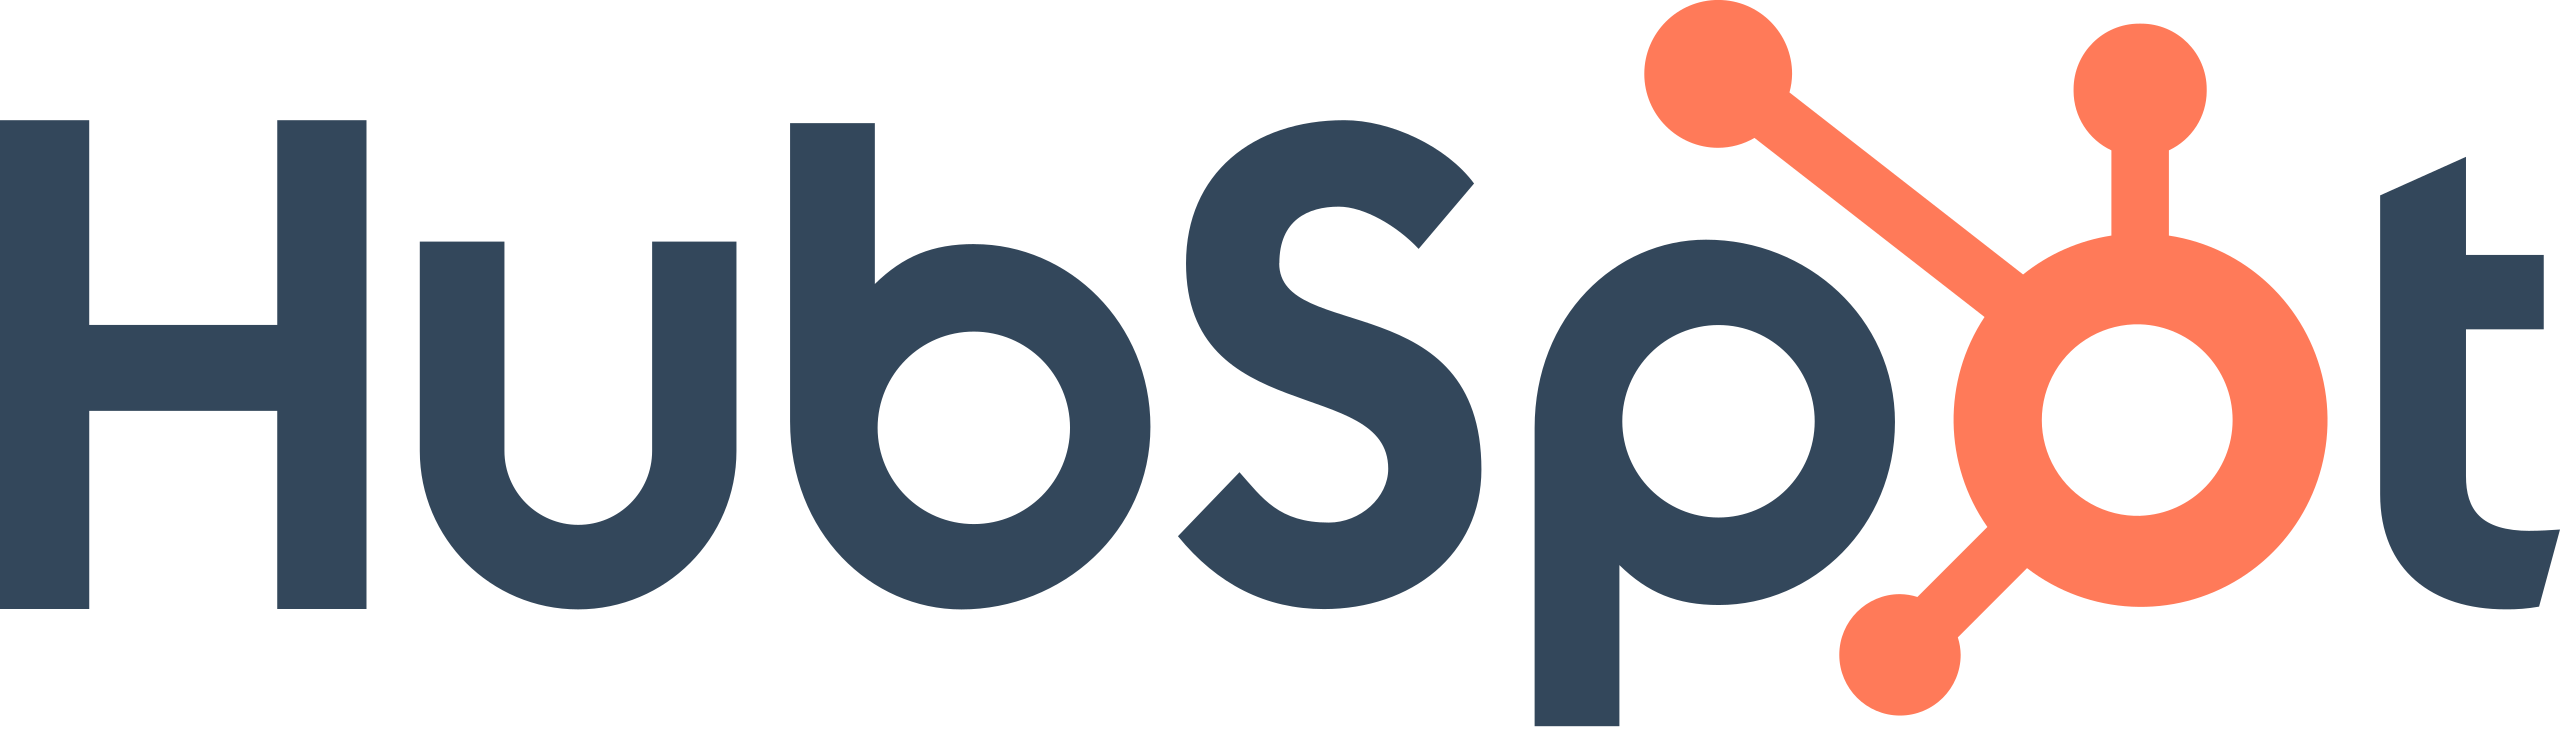 HubSpot anuncia apoyo a Laboratoria durante World Certification Week